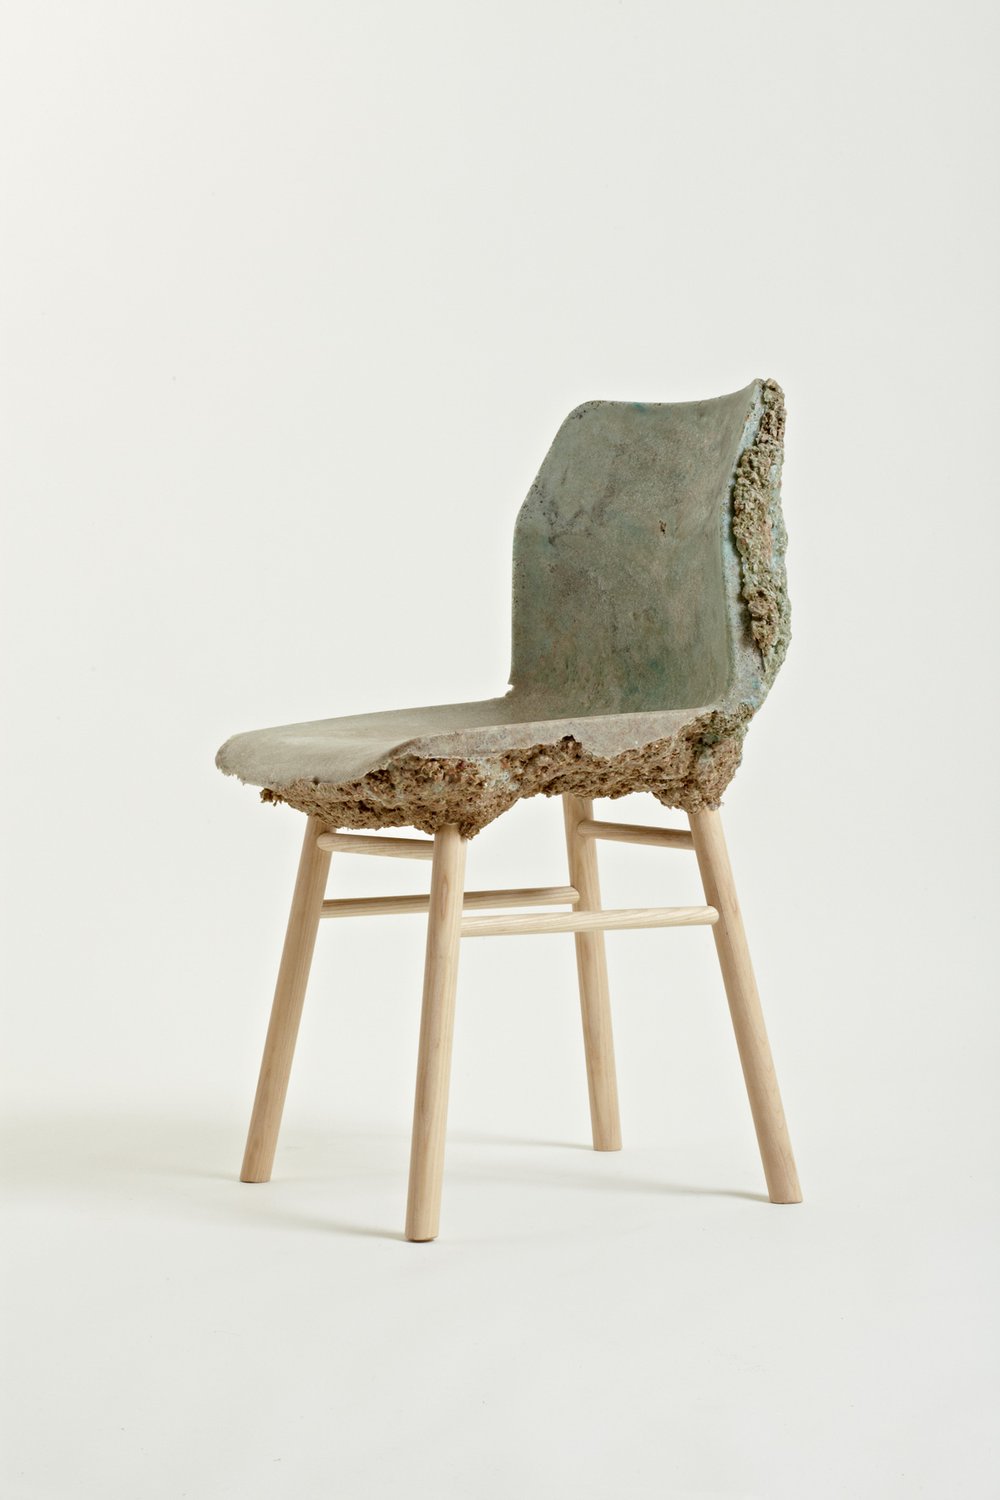 Well Proven Chair for Transnatural | Marjan van Aubel & James Shaw | transnaturallabel.com